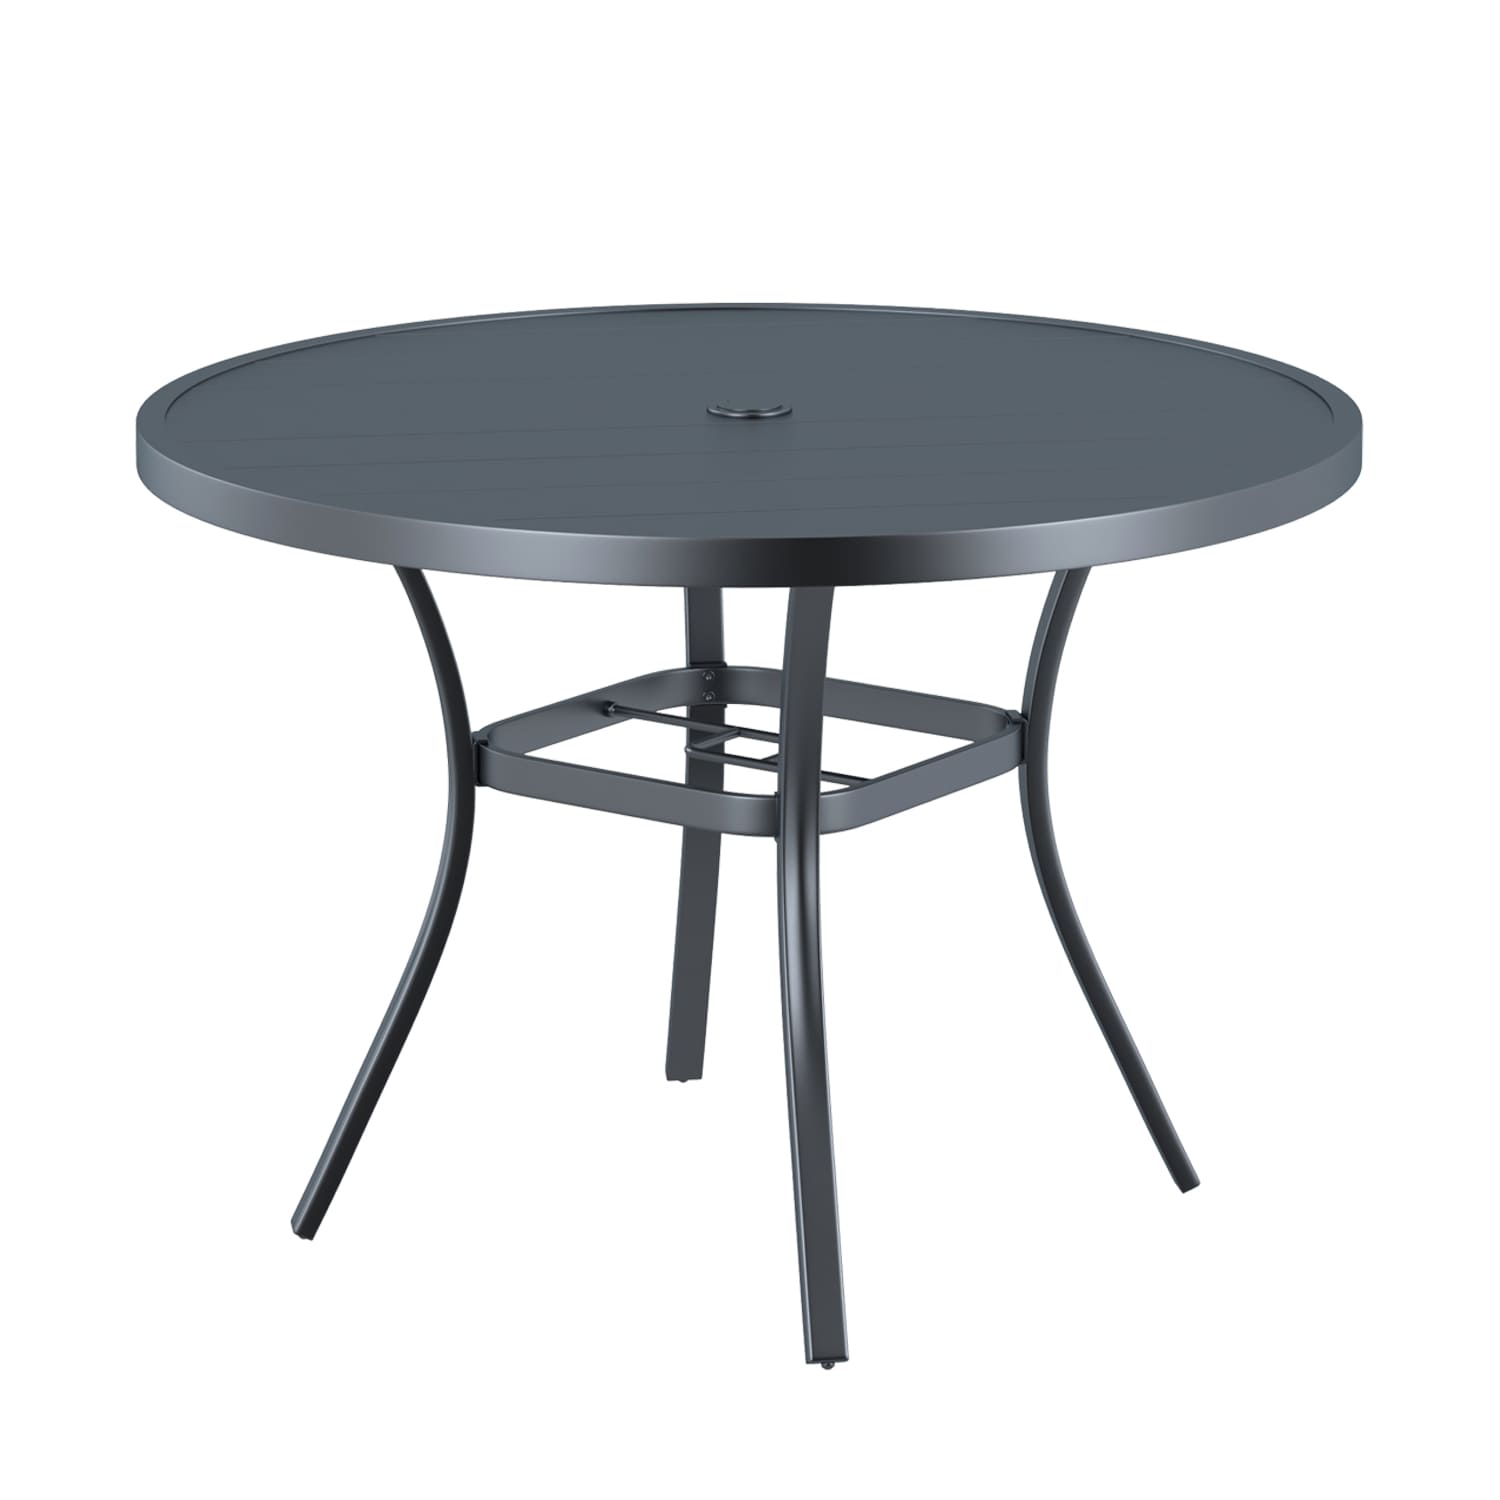 Vicllax 42" Round Metal Patio Table with Adjustable Umbrella Hole